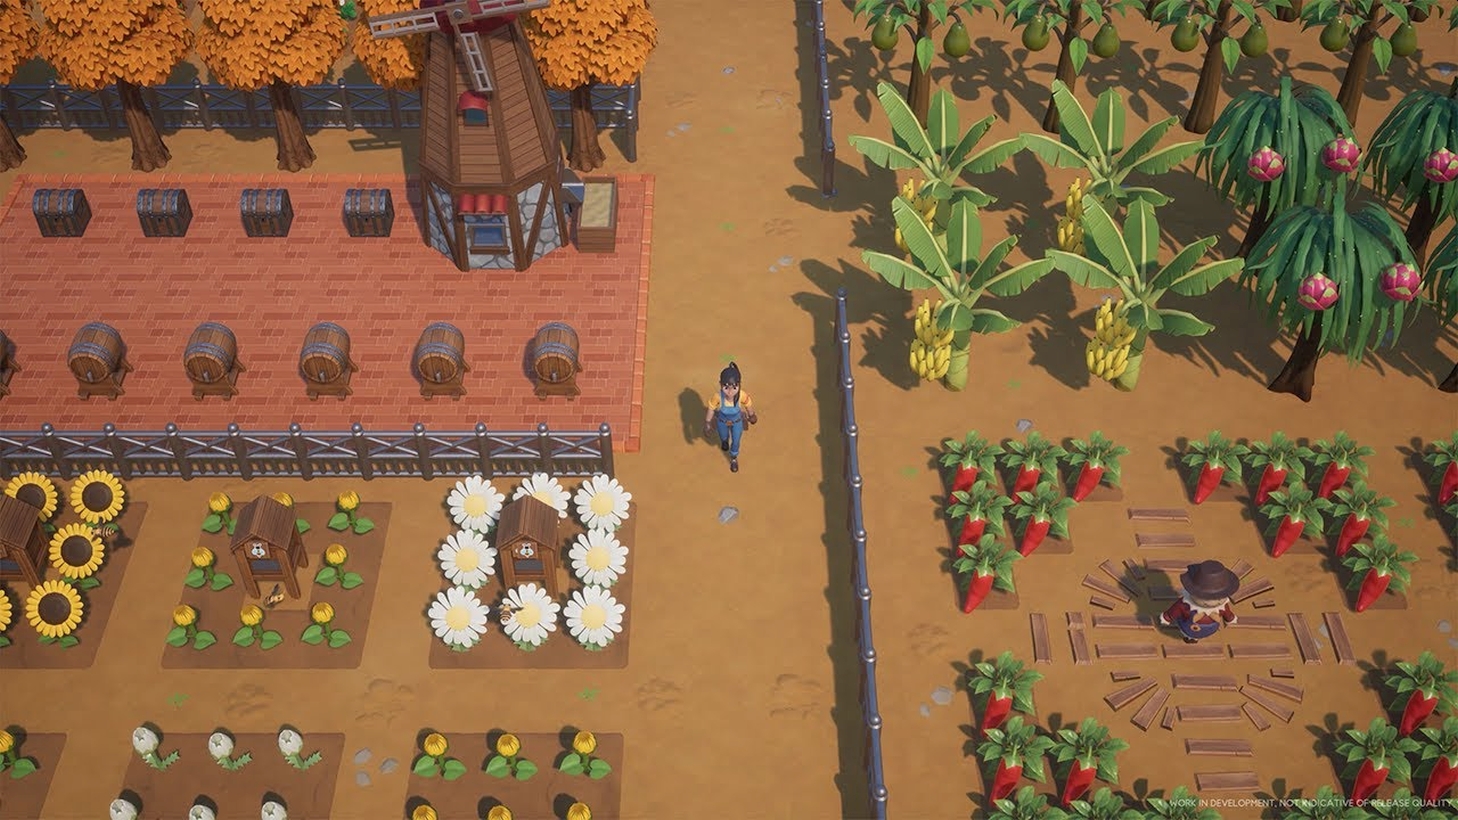 Stairway Games Announces Reimagined Farm Sim Coral Island